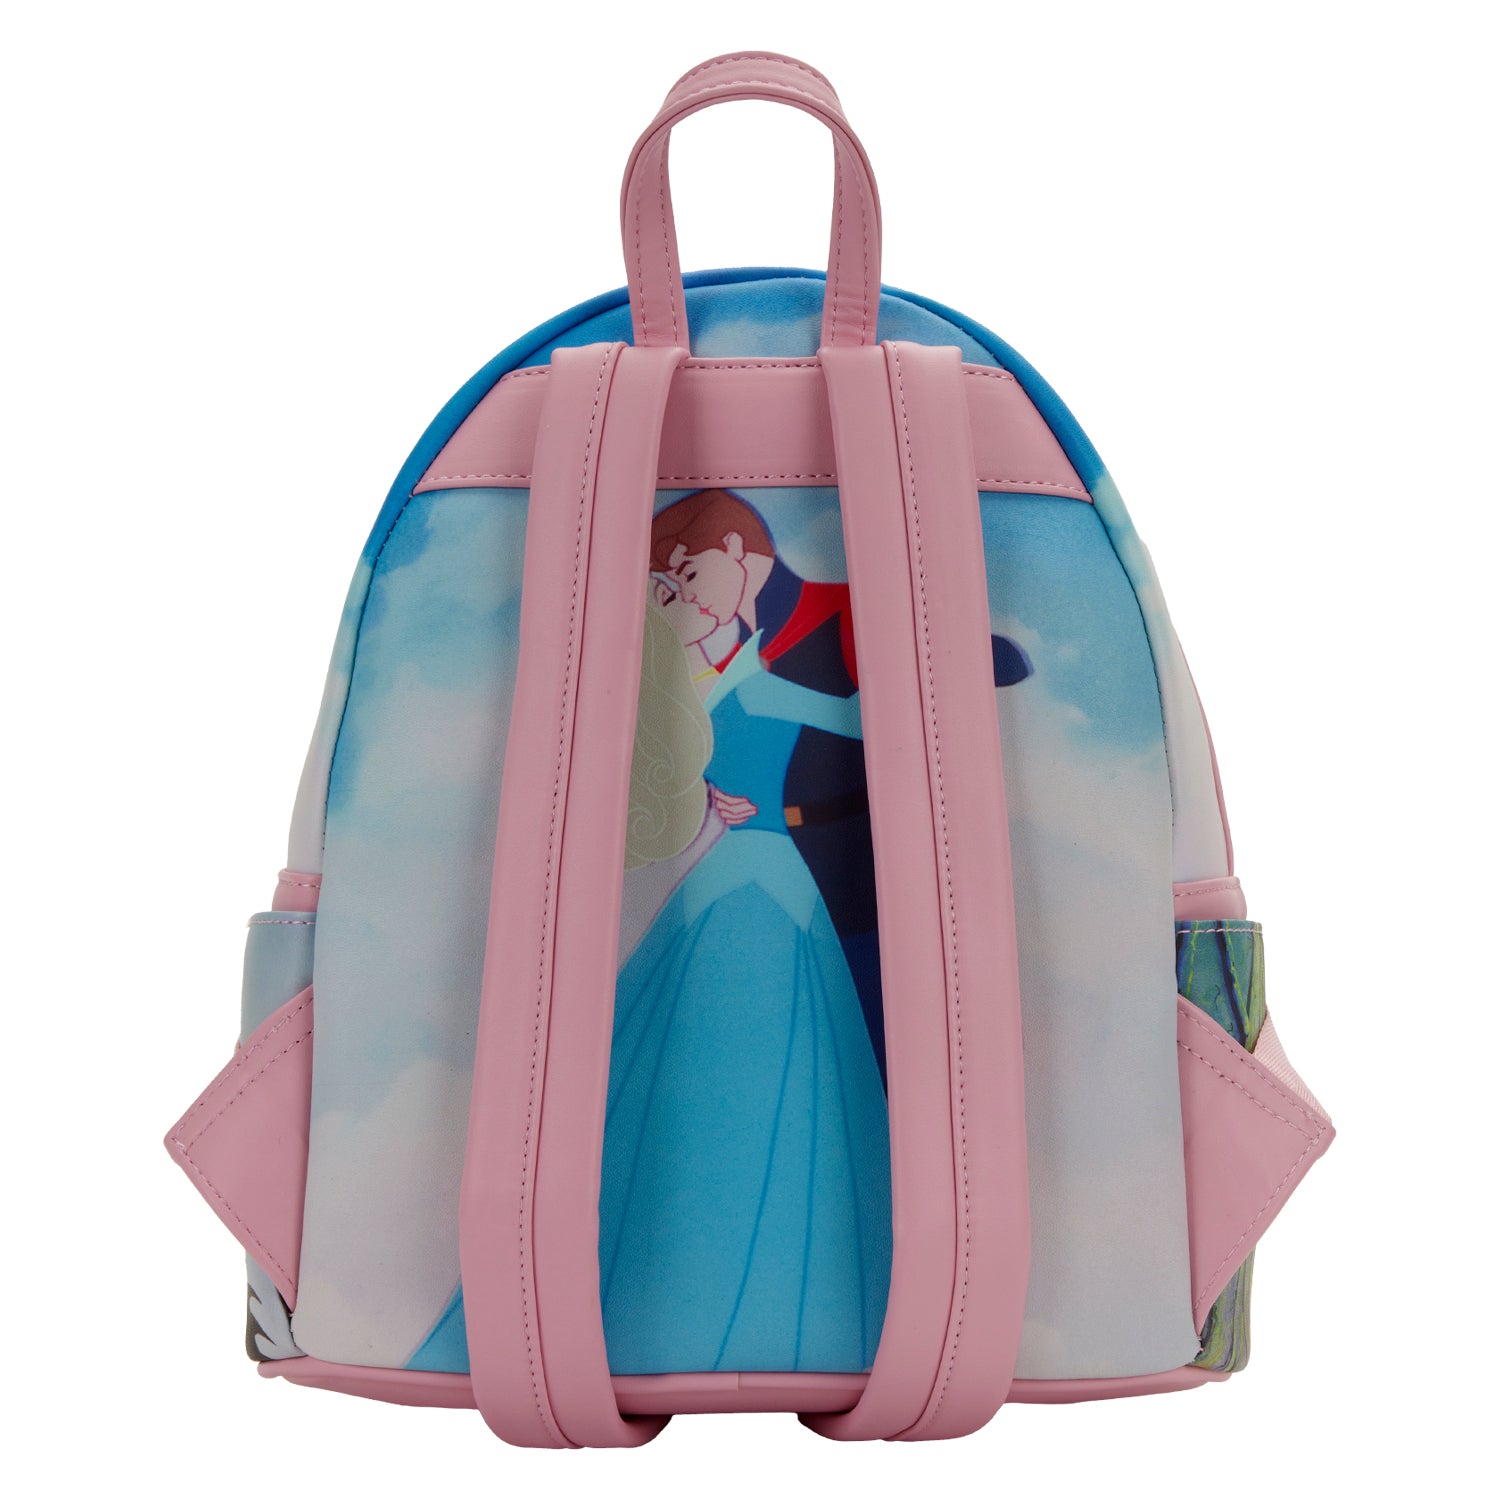 Loungefly Disney Sleeping Beauty Princess Scene Mini Backpack